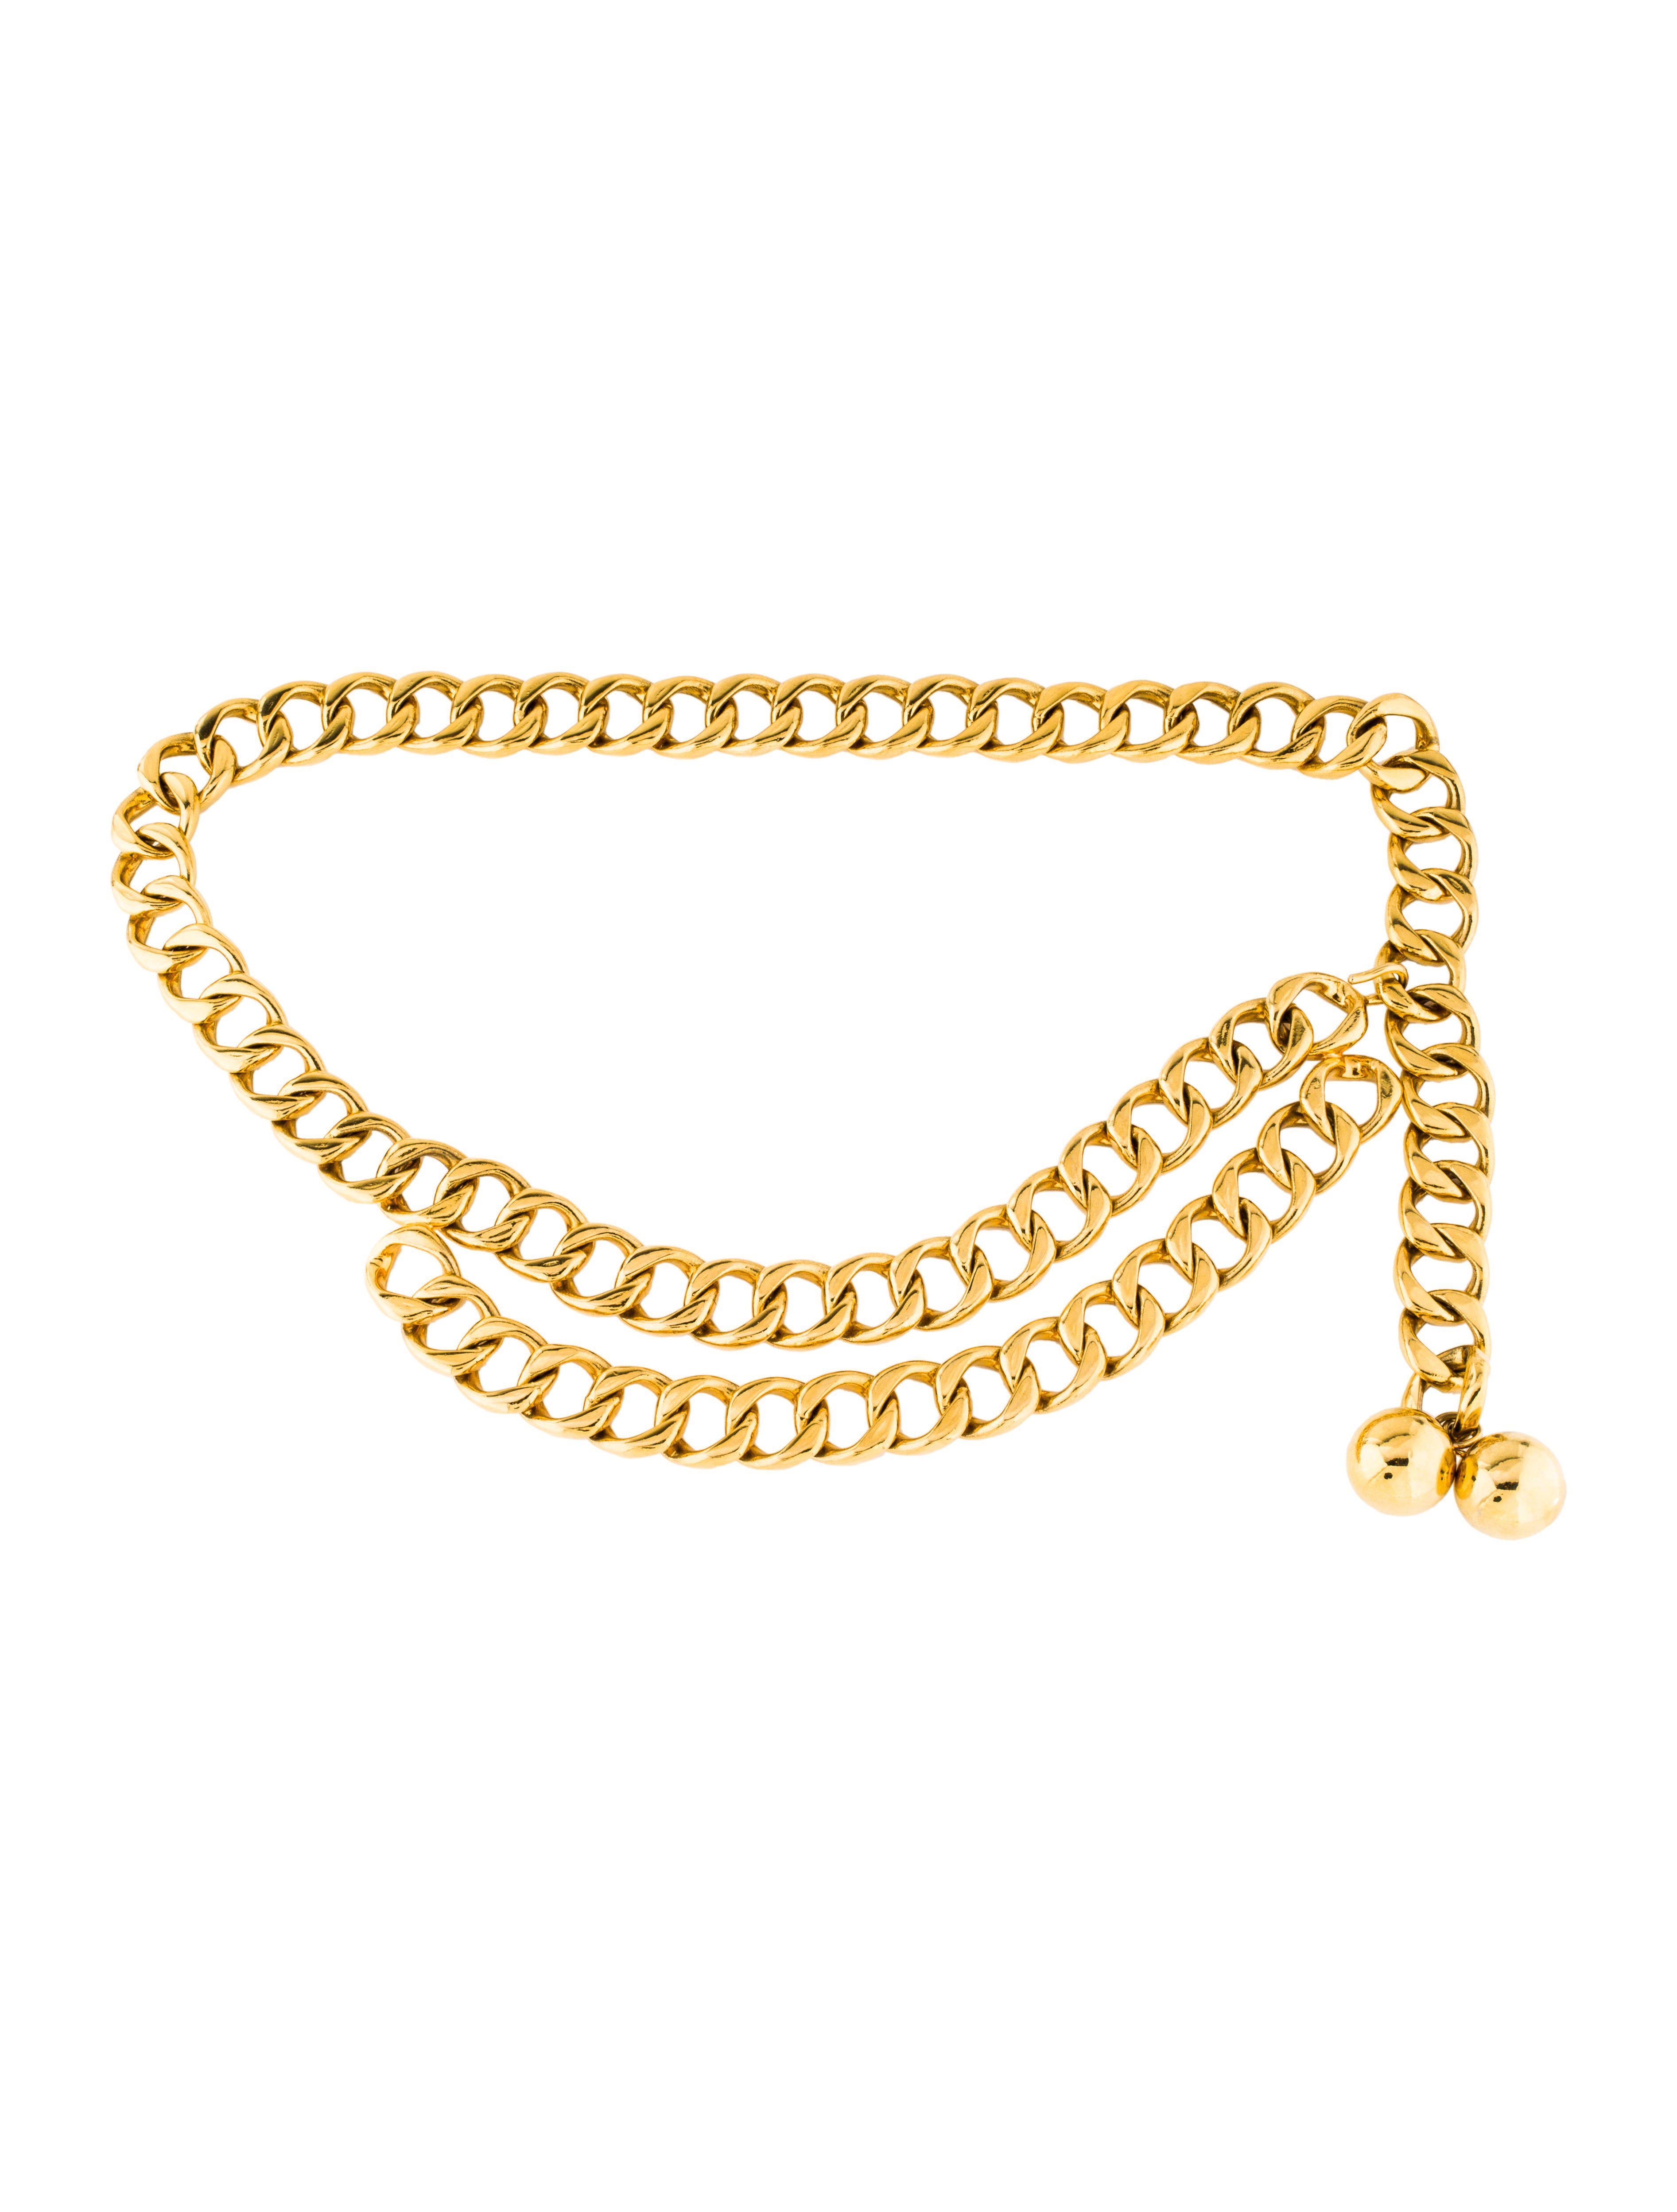 Lyst - Chanel Chain Ball Belt Gold in Metallic